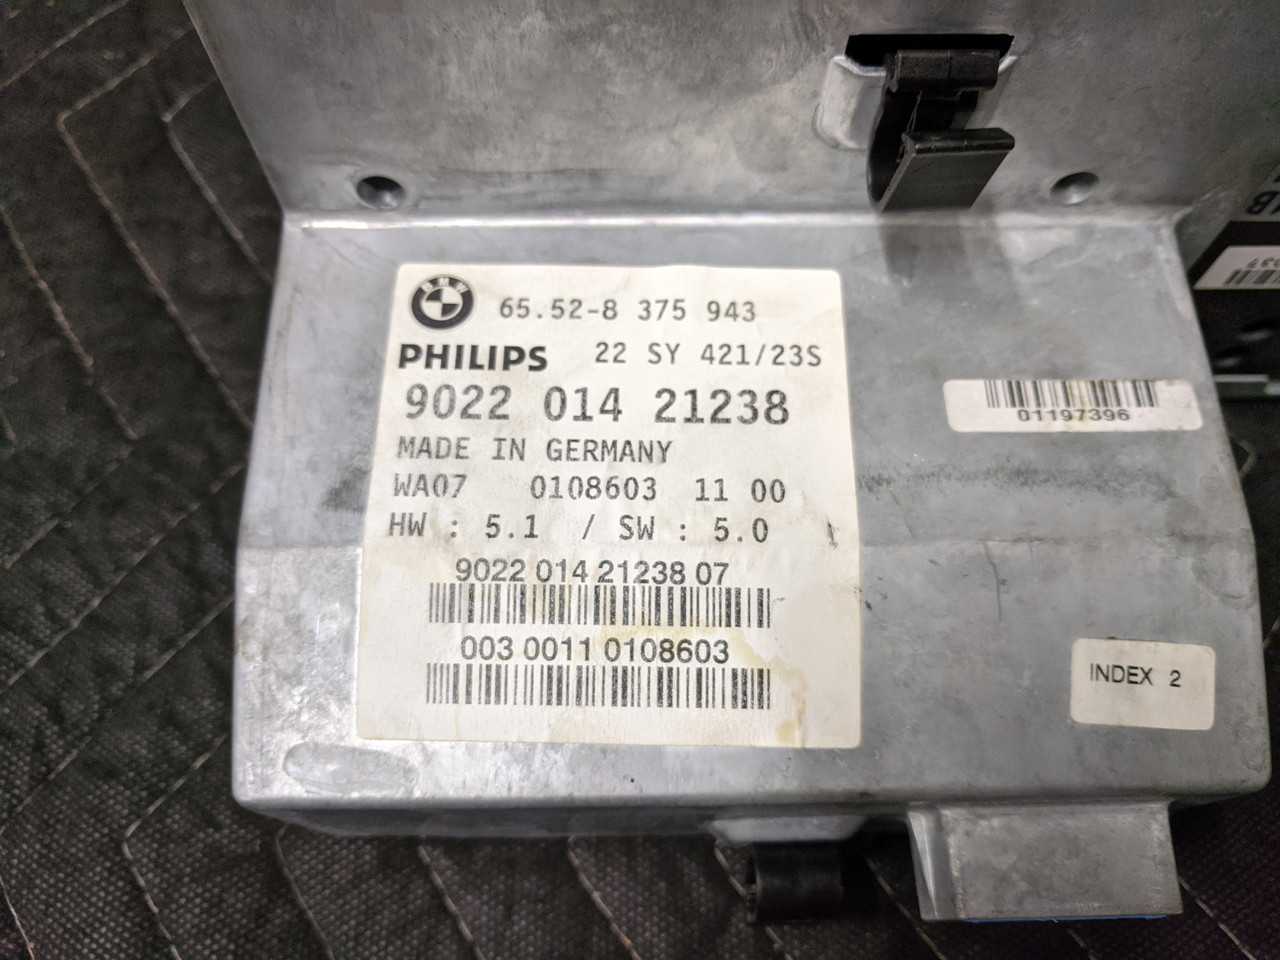 BMW E38 7-Series Radio Navigation Tape Player Philips 65528375943